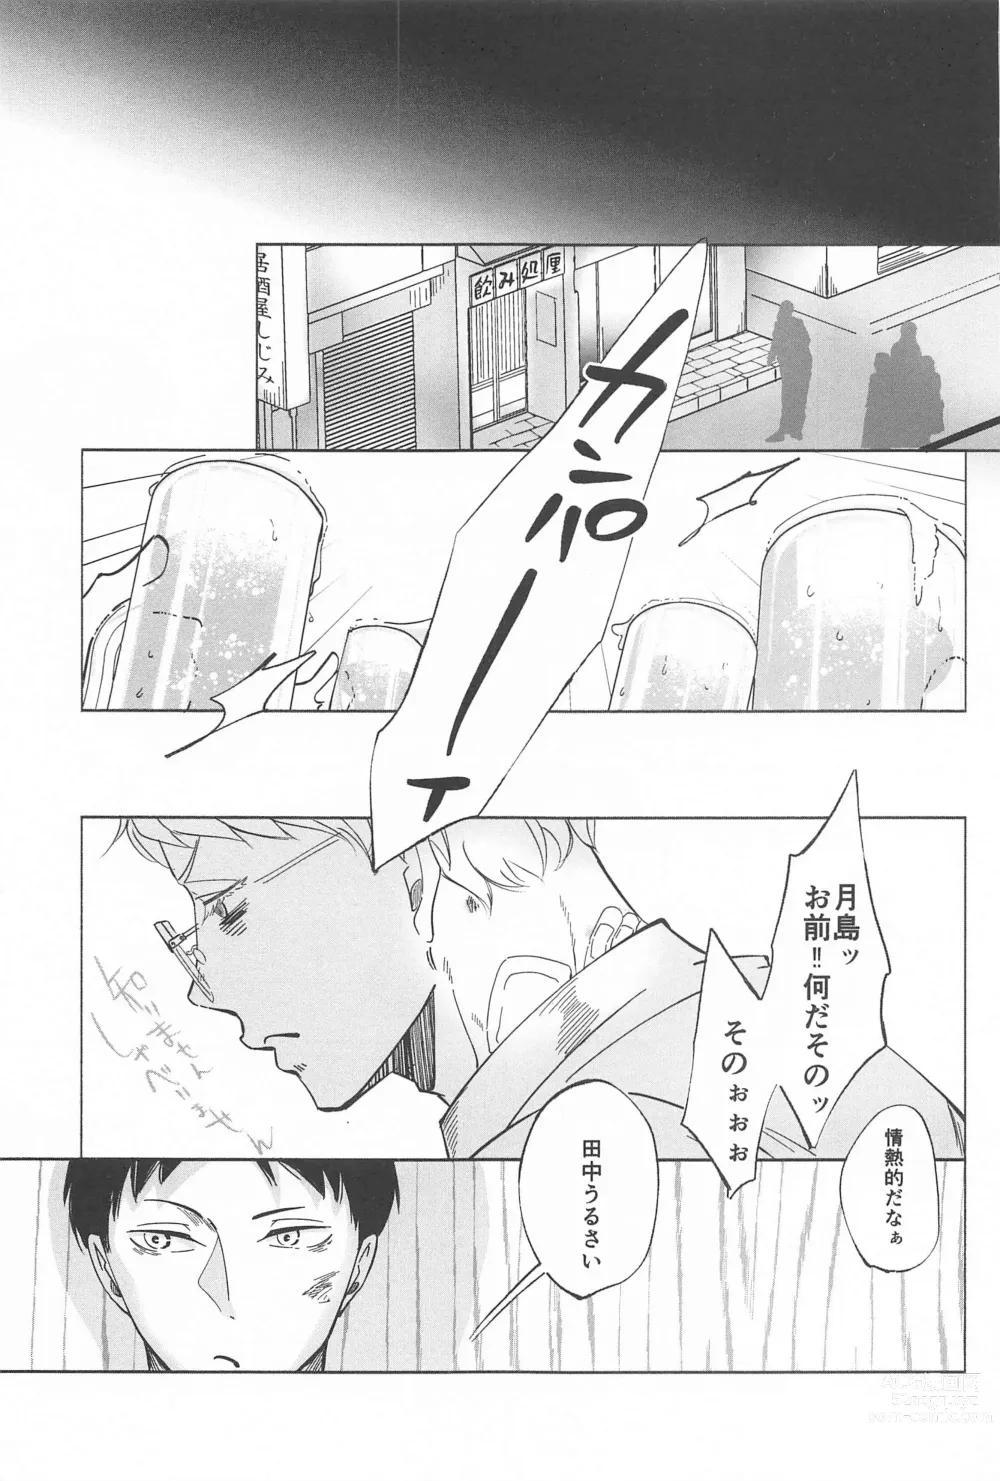 Page 23 of doujinshi Ketsui no Katachi